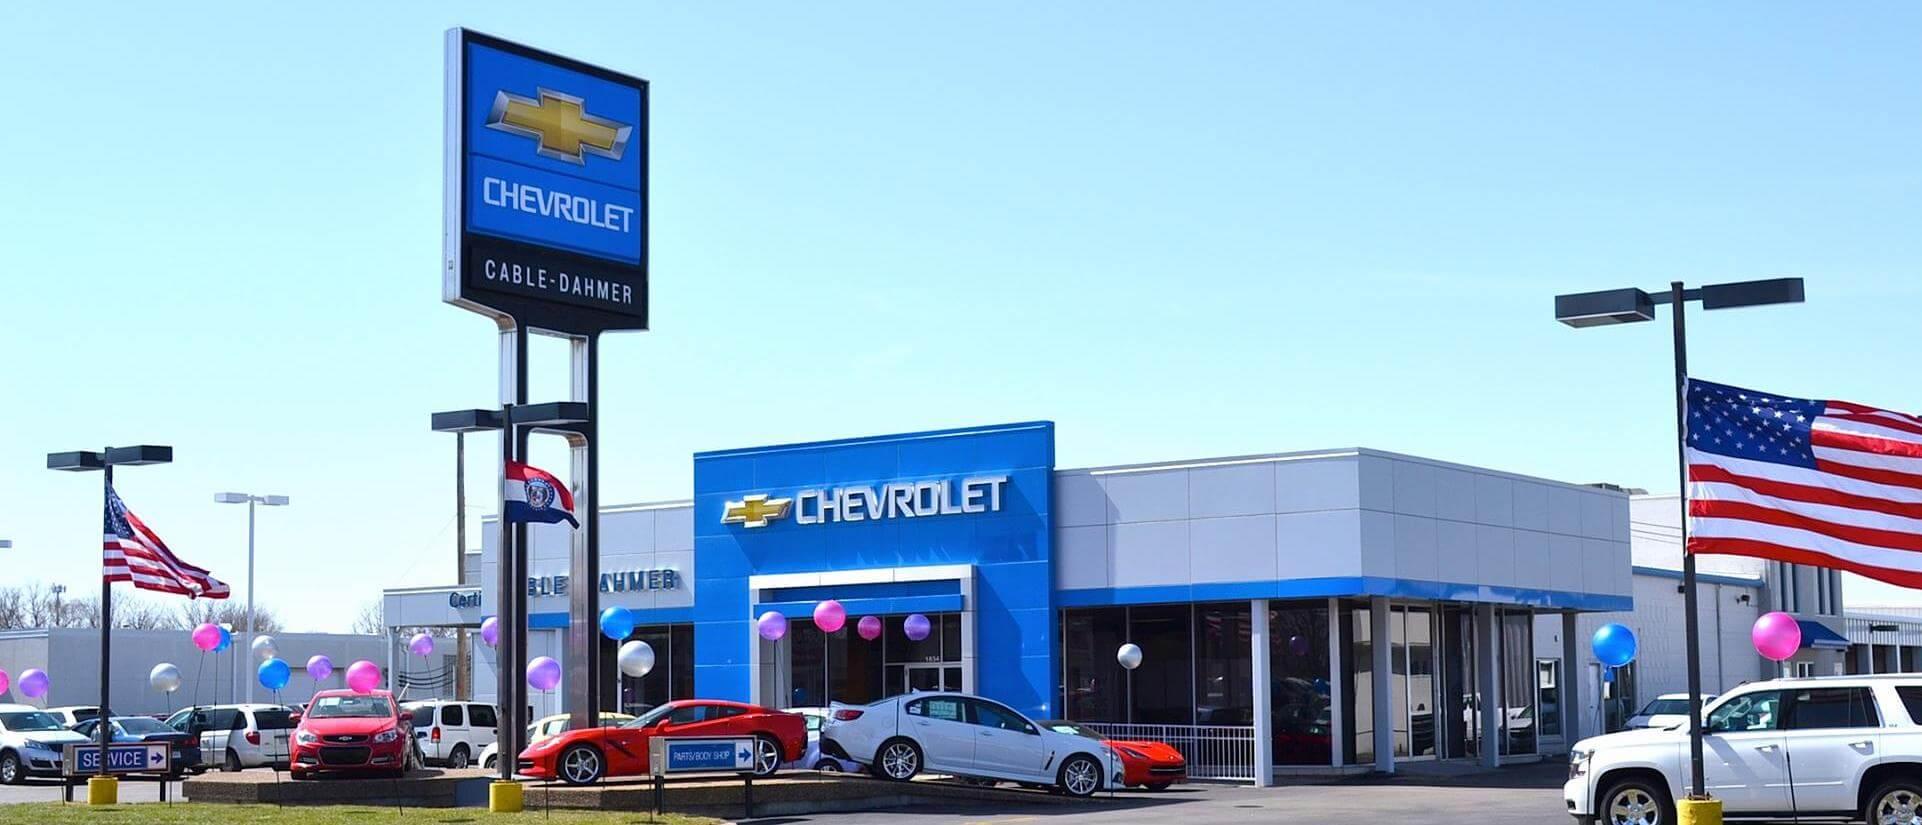 Cable Dahmer Kansas City Chevrolet is a Kansas City Chevrolet dealer and a new car and used car 